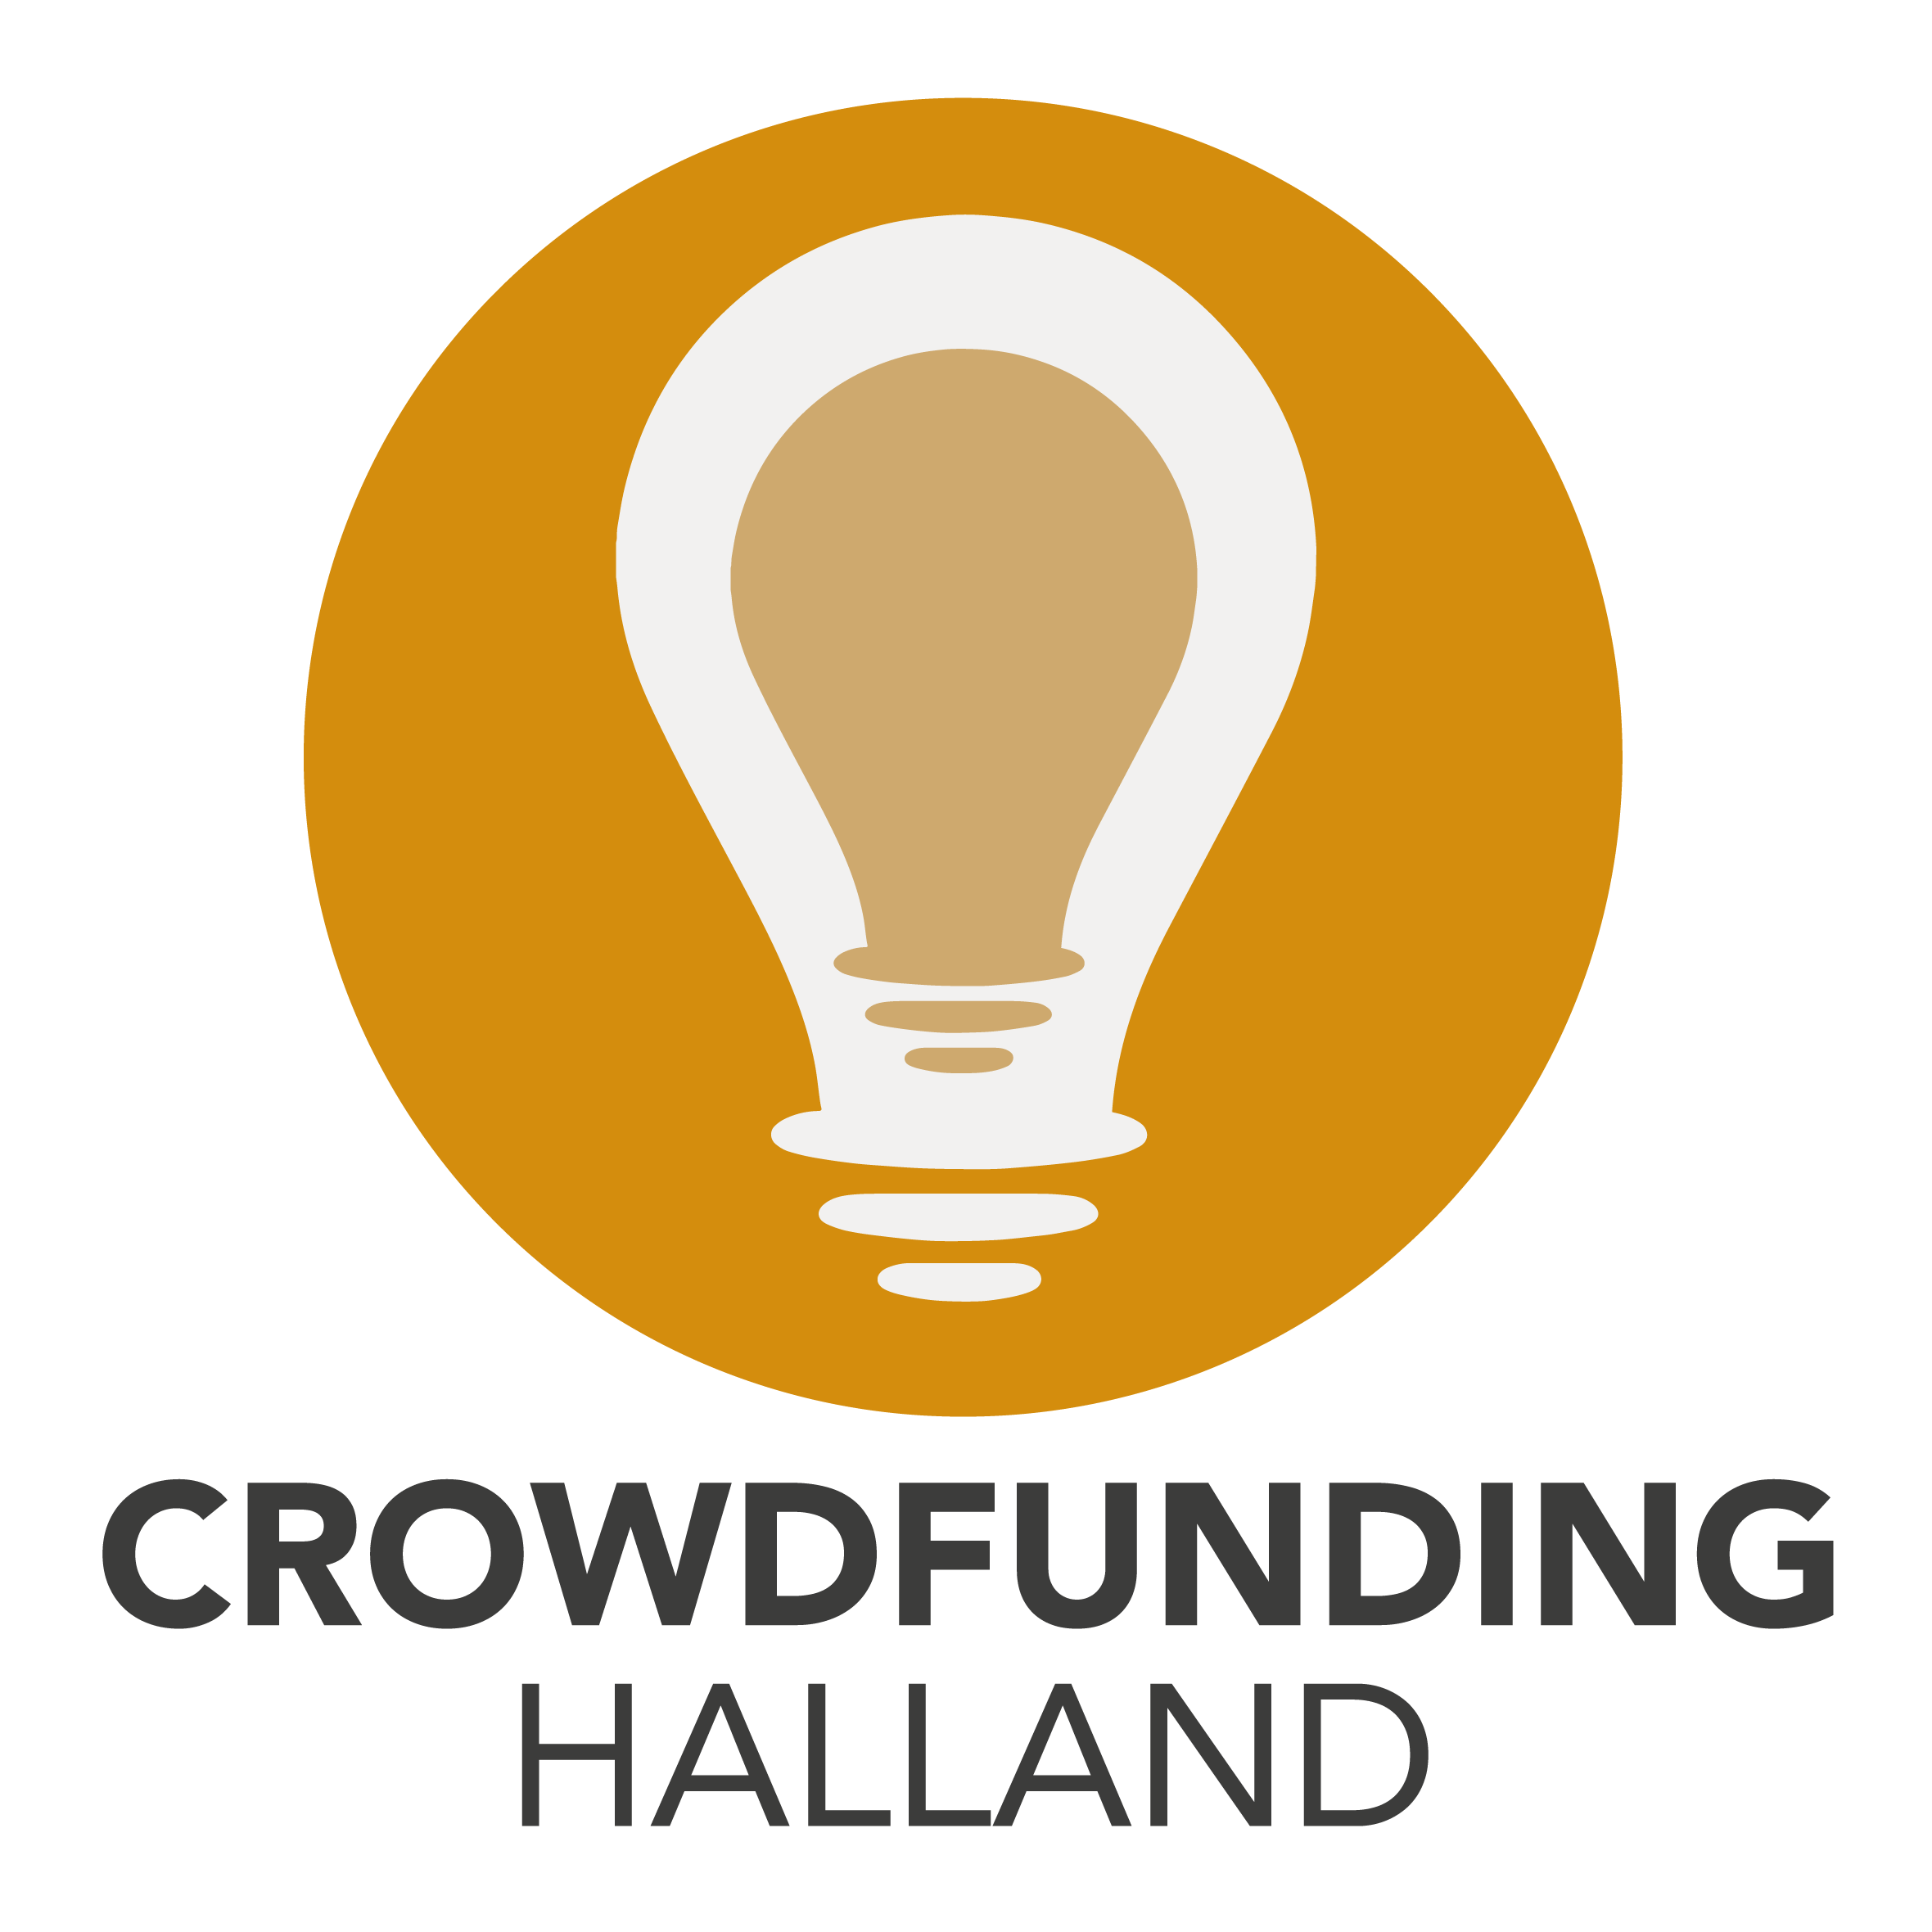 Crowdfunding_logo- PNG (002)